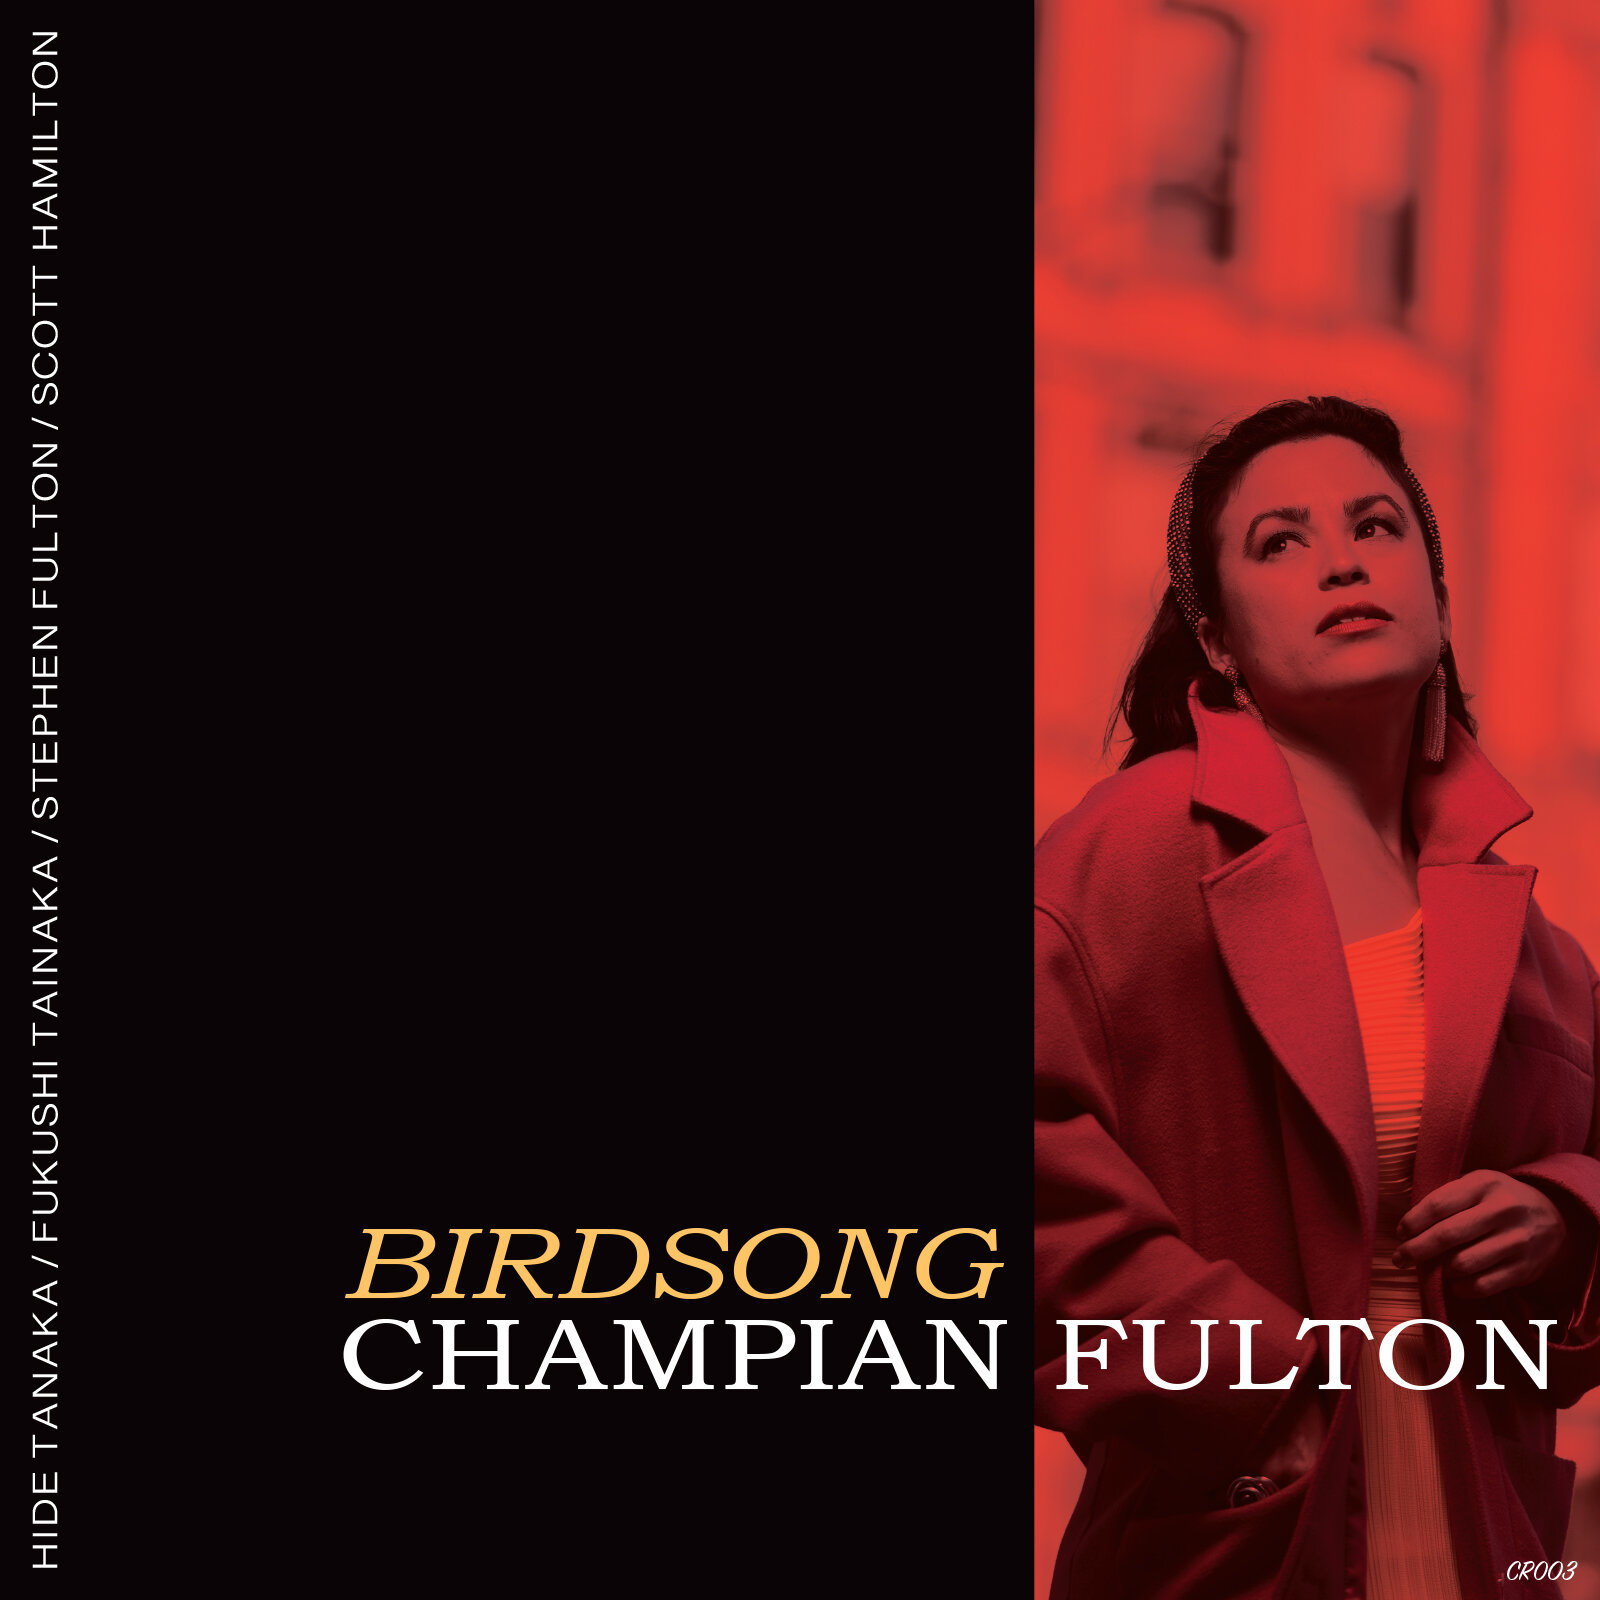 Champian Fulton / Birdsong